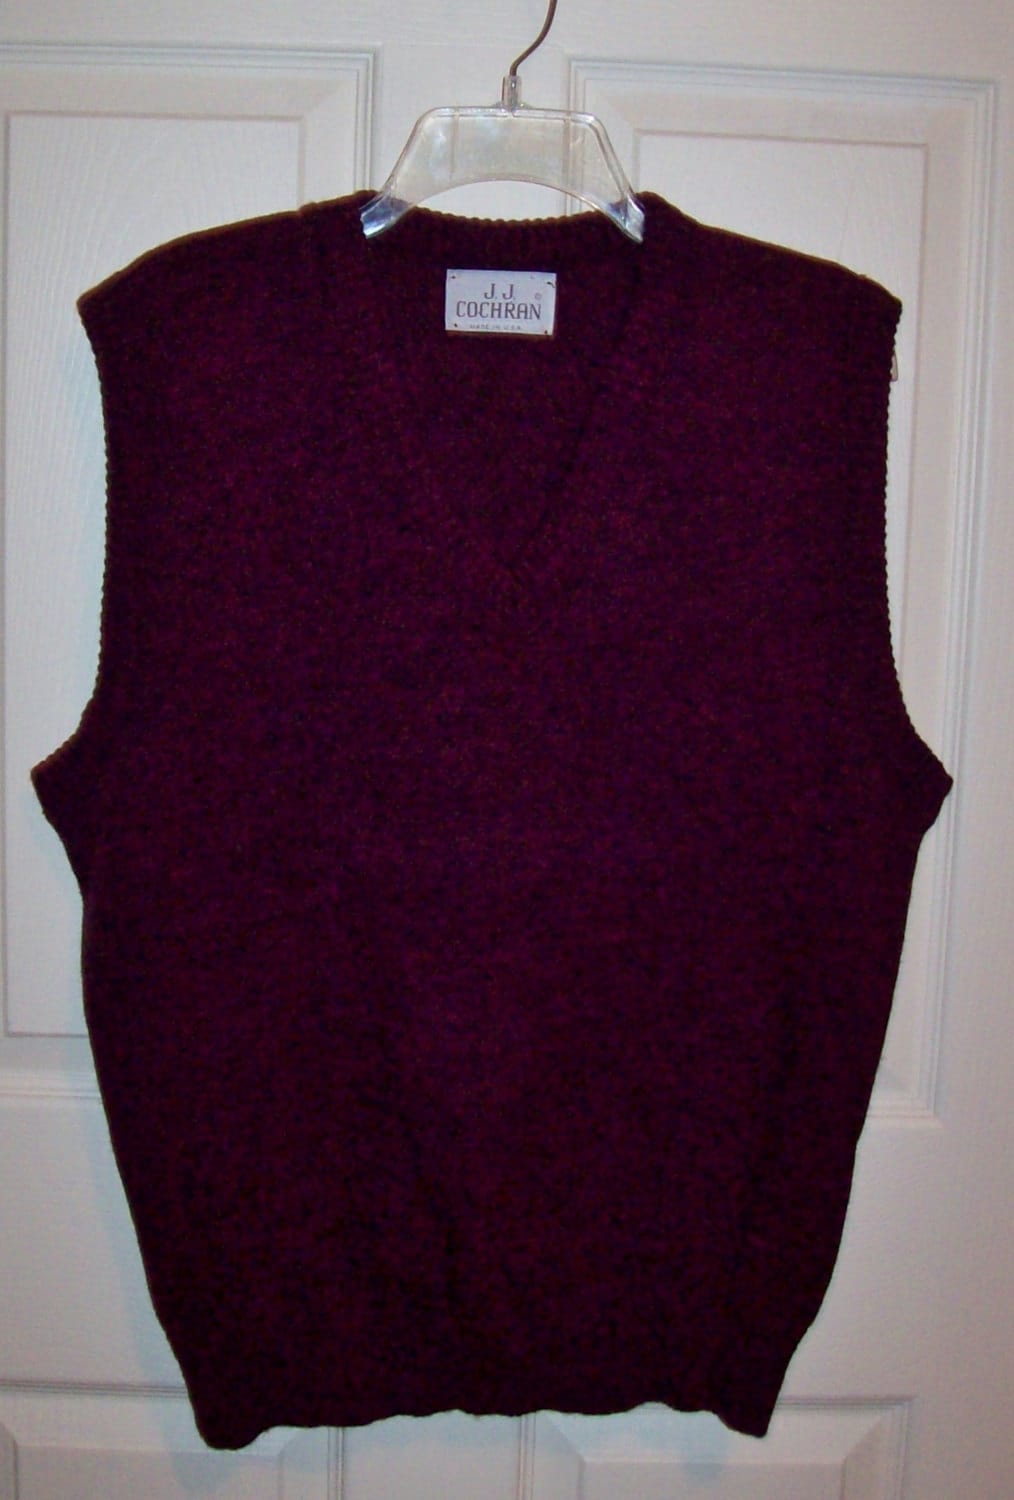 Vintage Men's Maroon Sweater Vest by J J Cochran Large